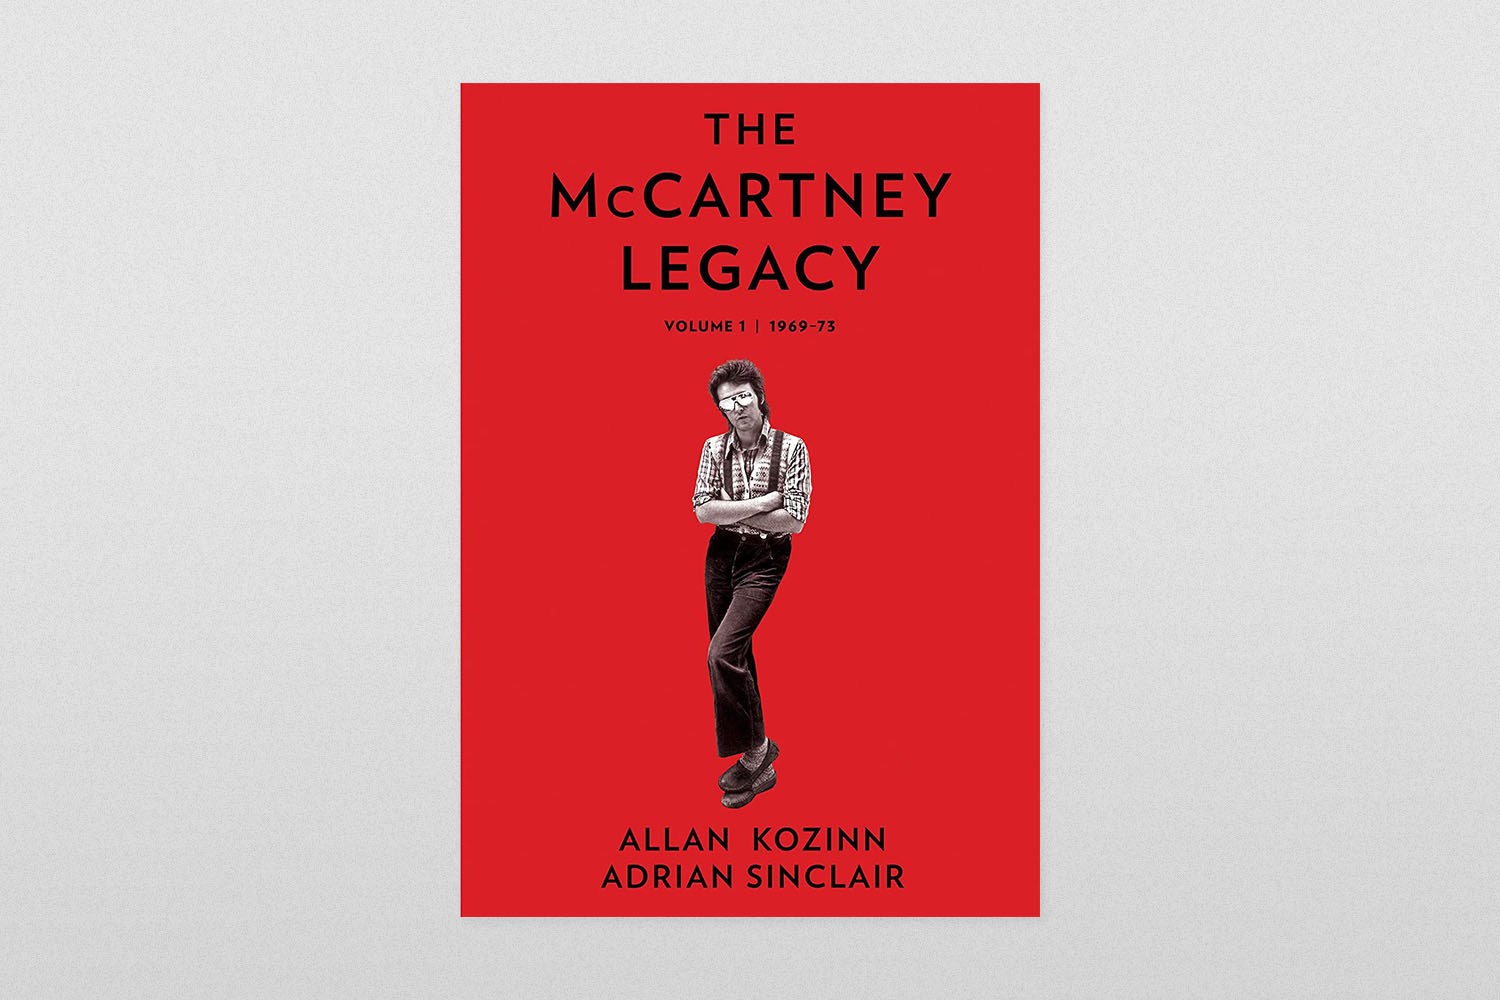 The McCartney Legacy by Allan Kozinn and Adrian Sinclair